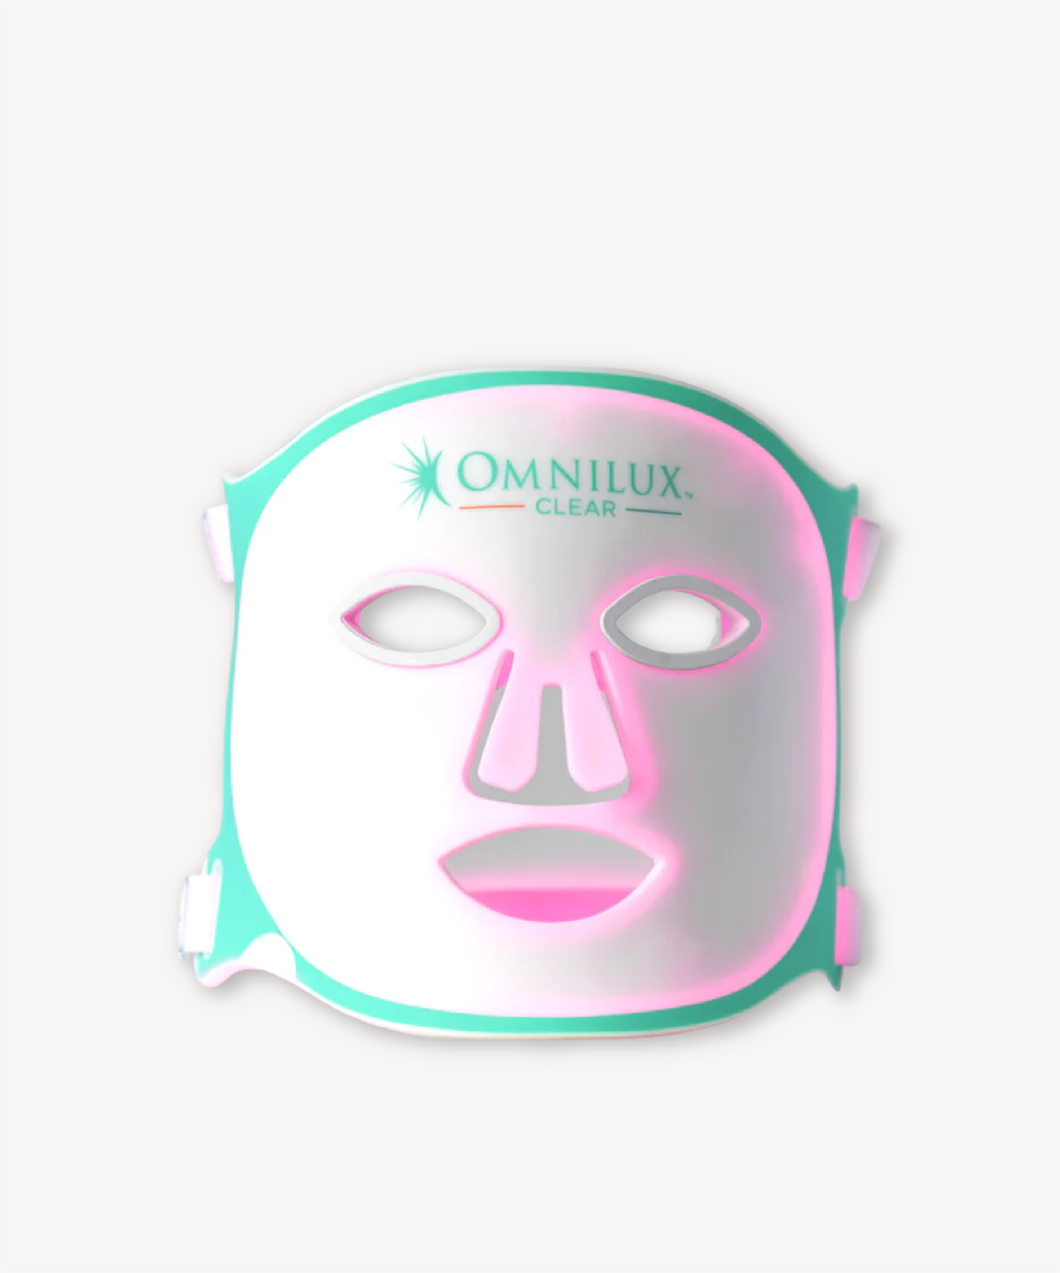 Omnilux Clear™